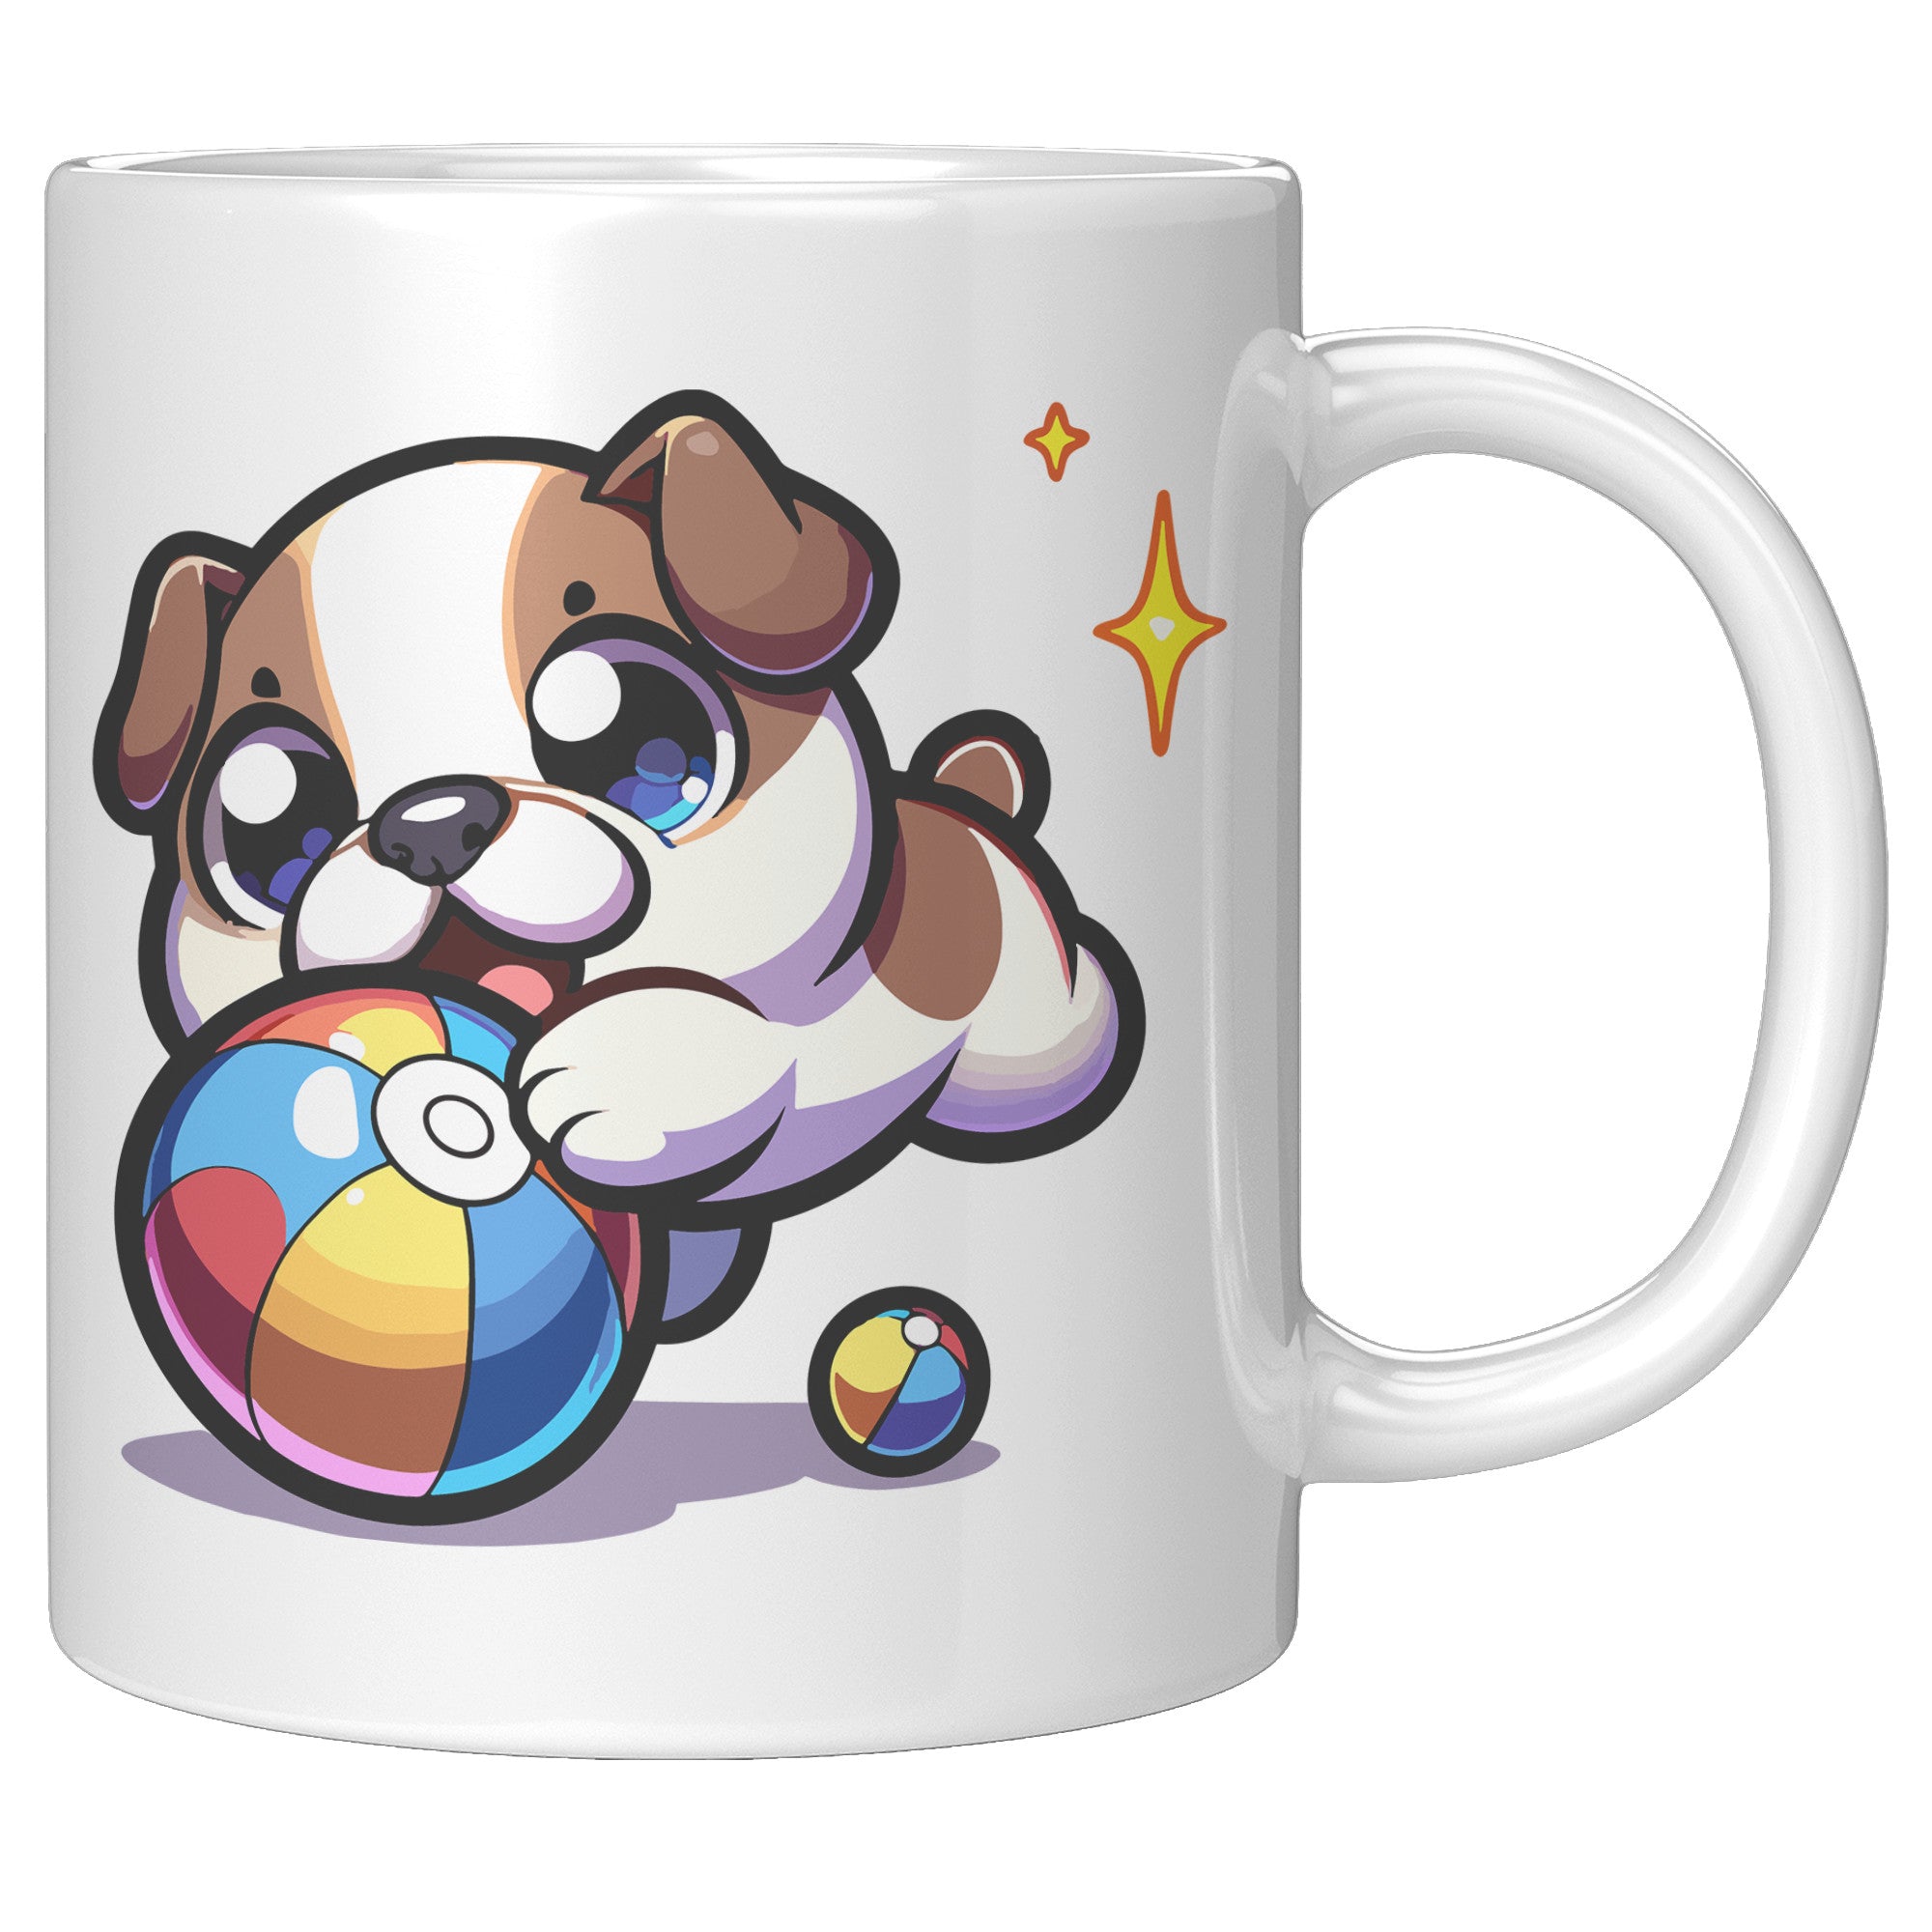 11oz French Bulldog Cartoon Coffee Mug - Frenchie Lover Coffee Mug - Perfect Gift for French Bulldog Owners - Adorable Bat-Eared Dog Coffee Mug - M